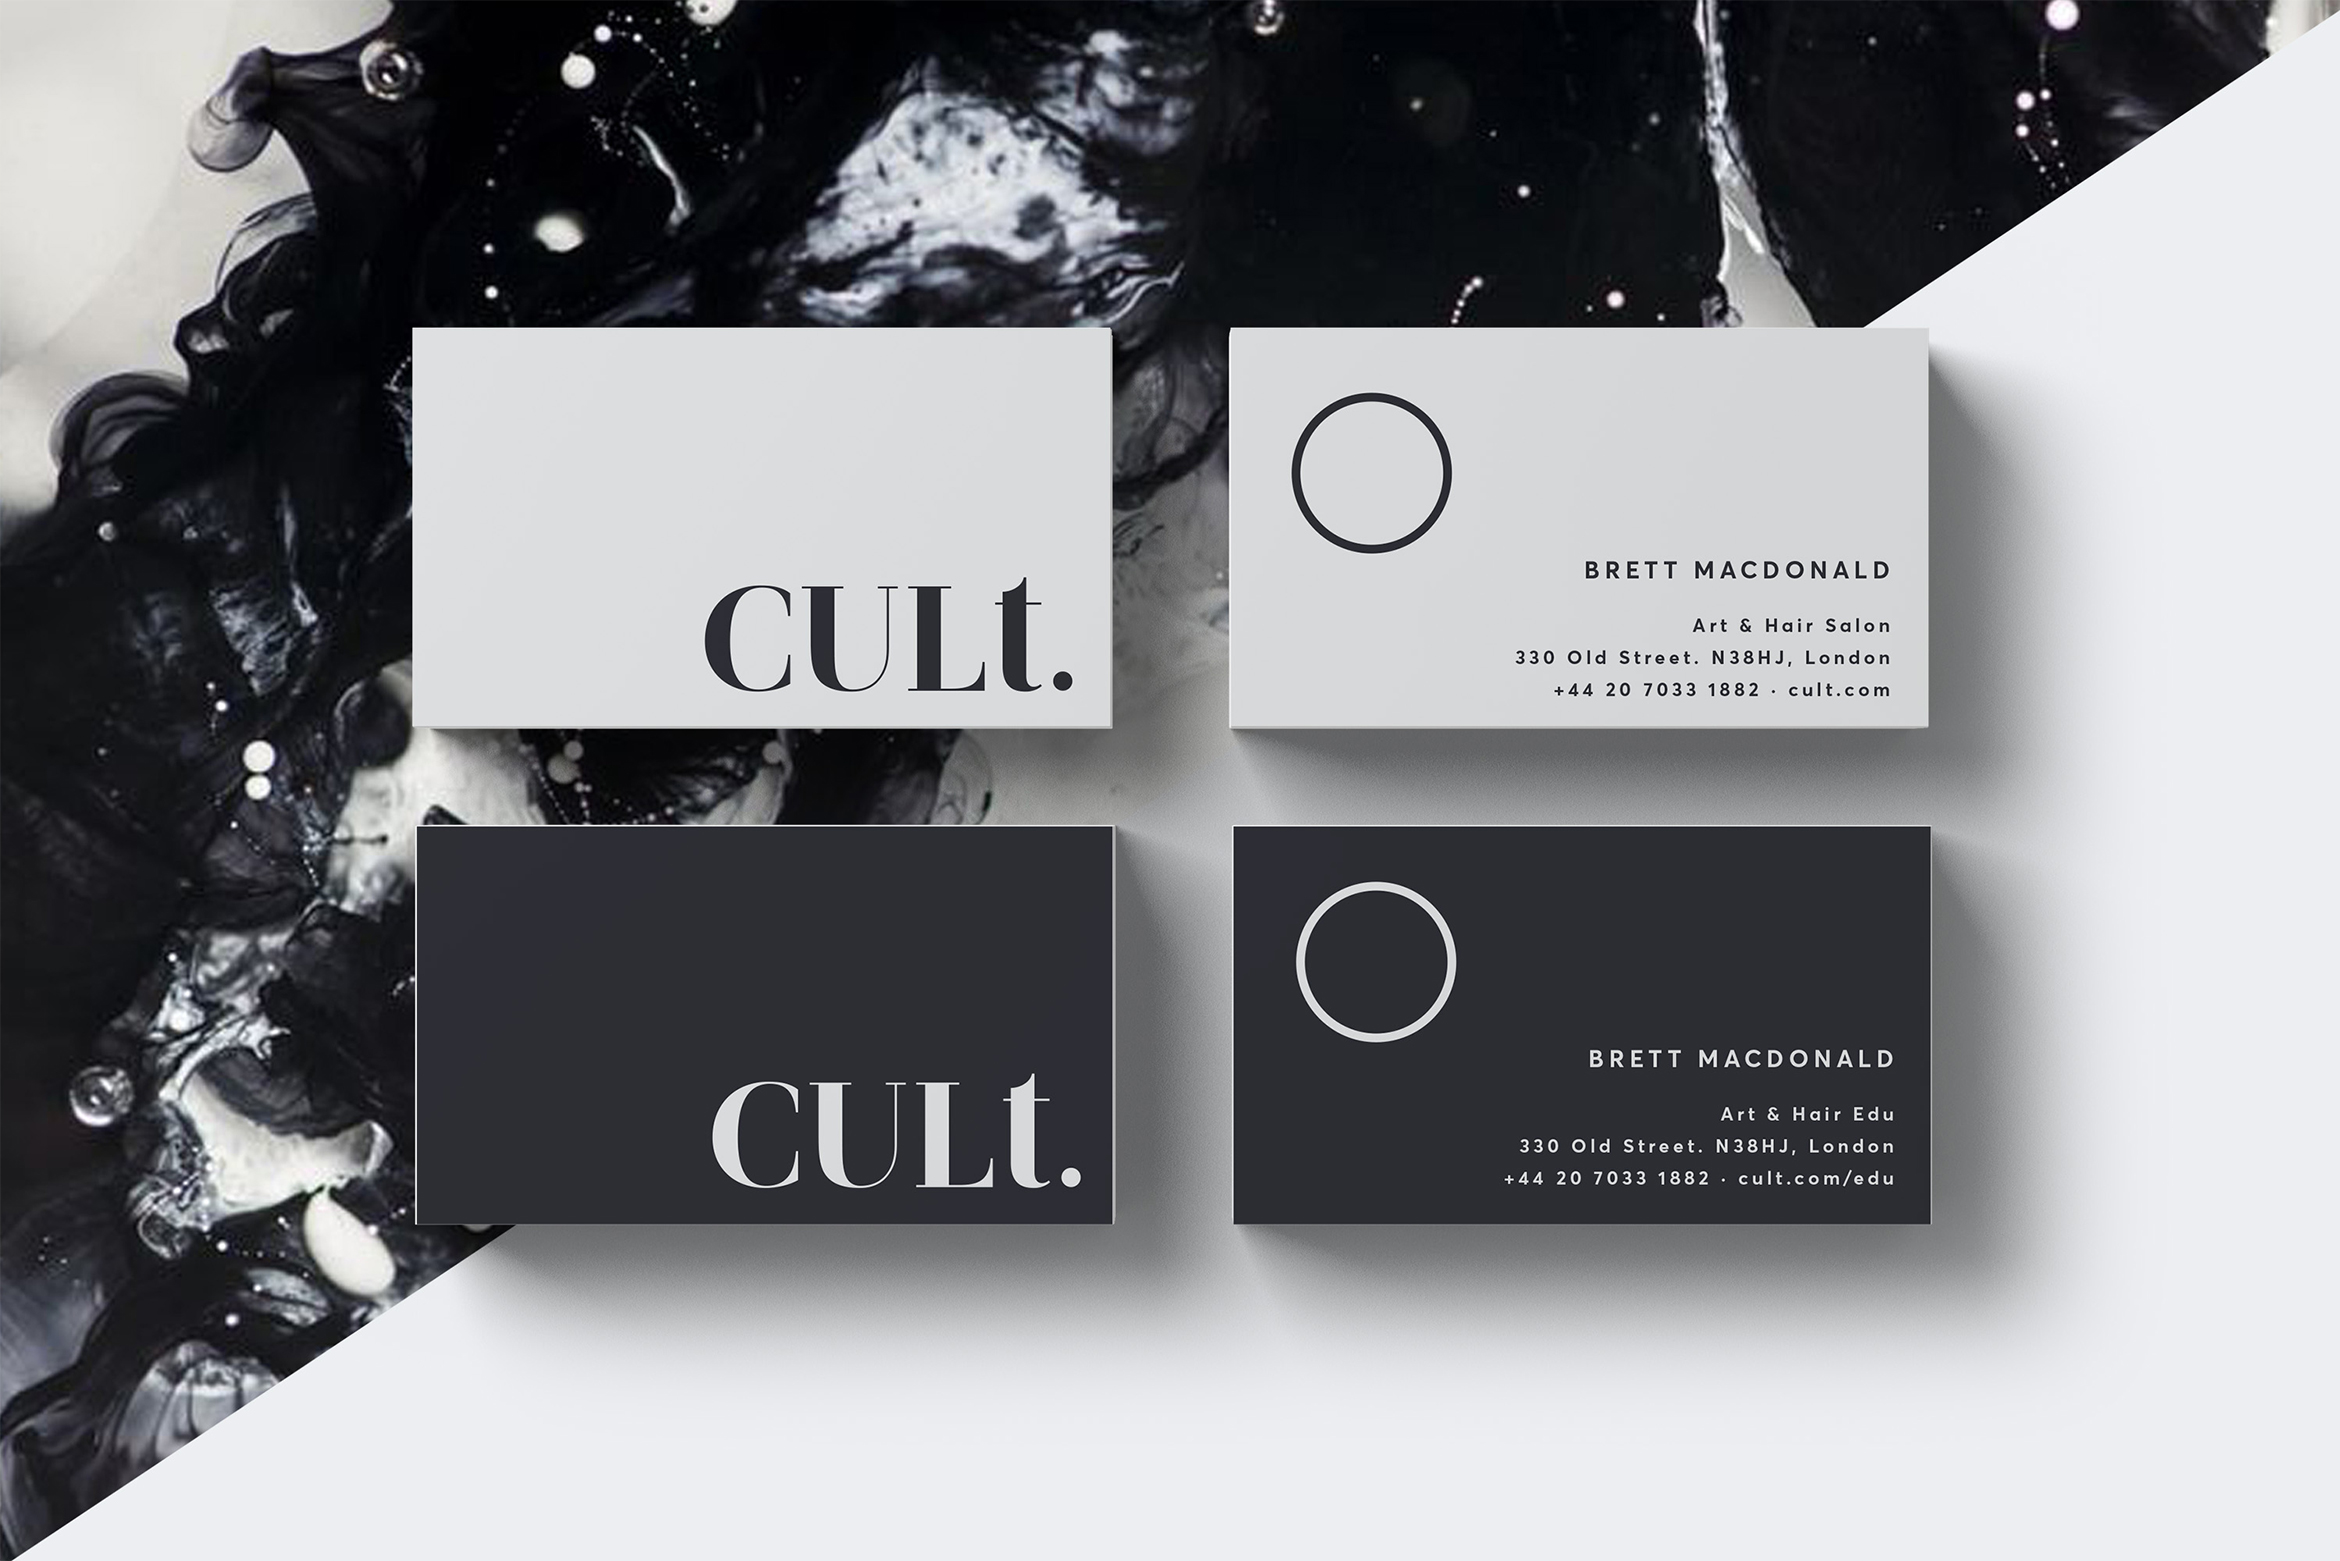 CULT_businesscard_full_grid